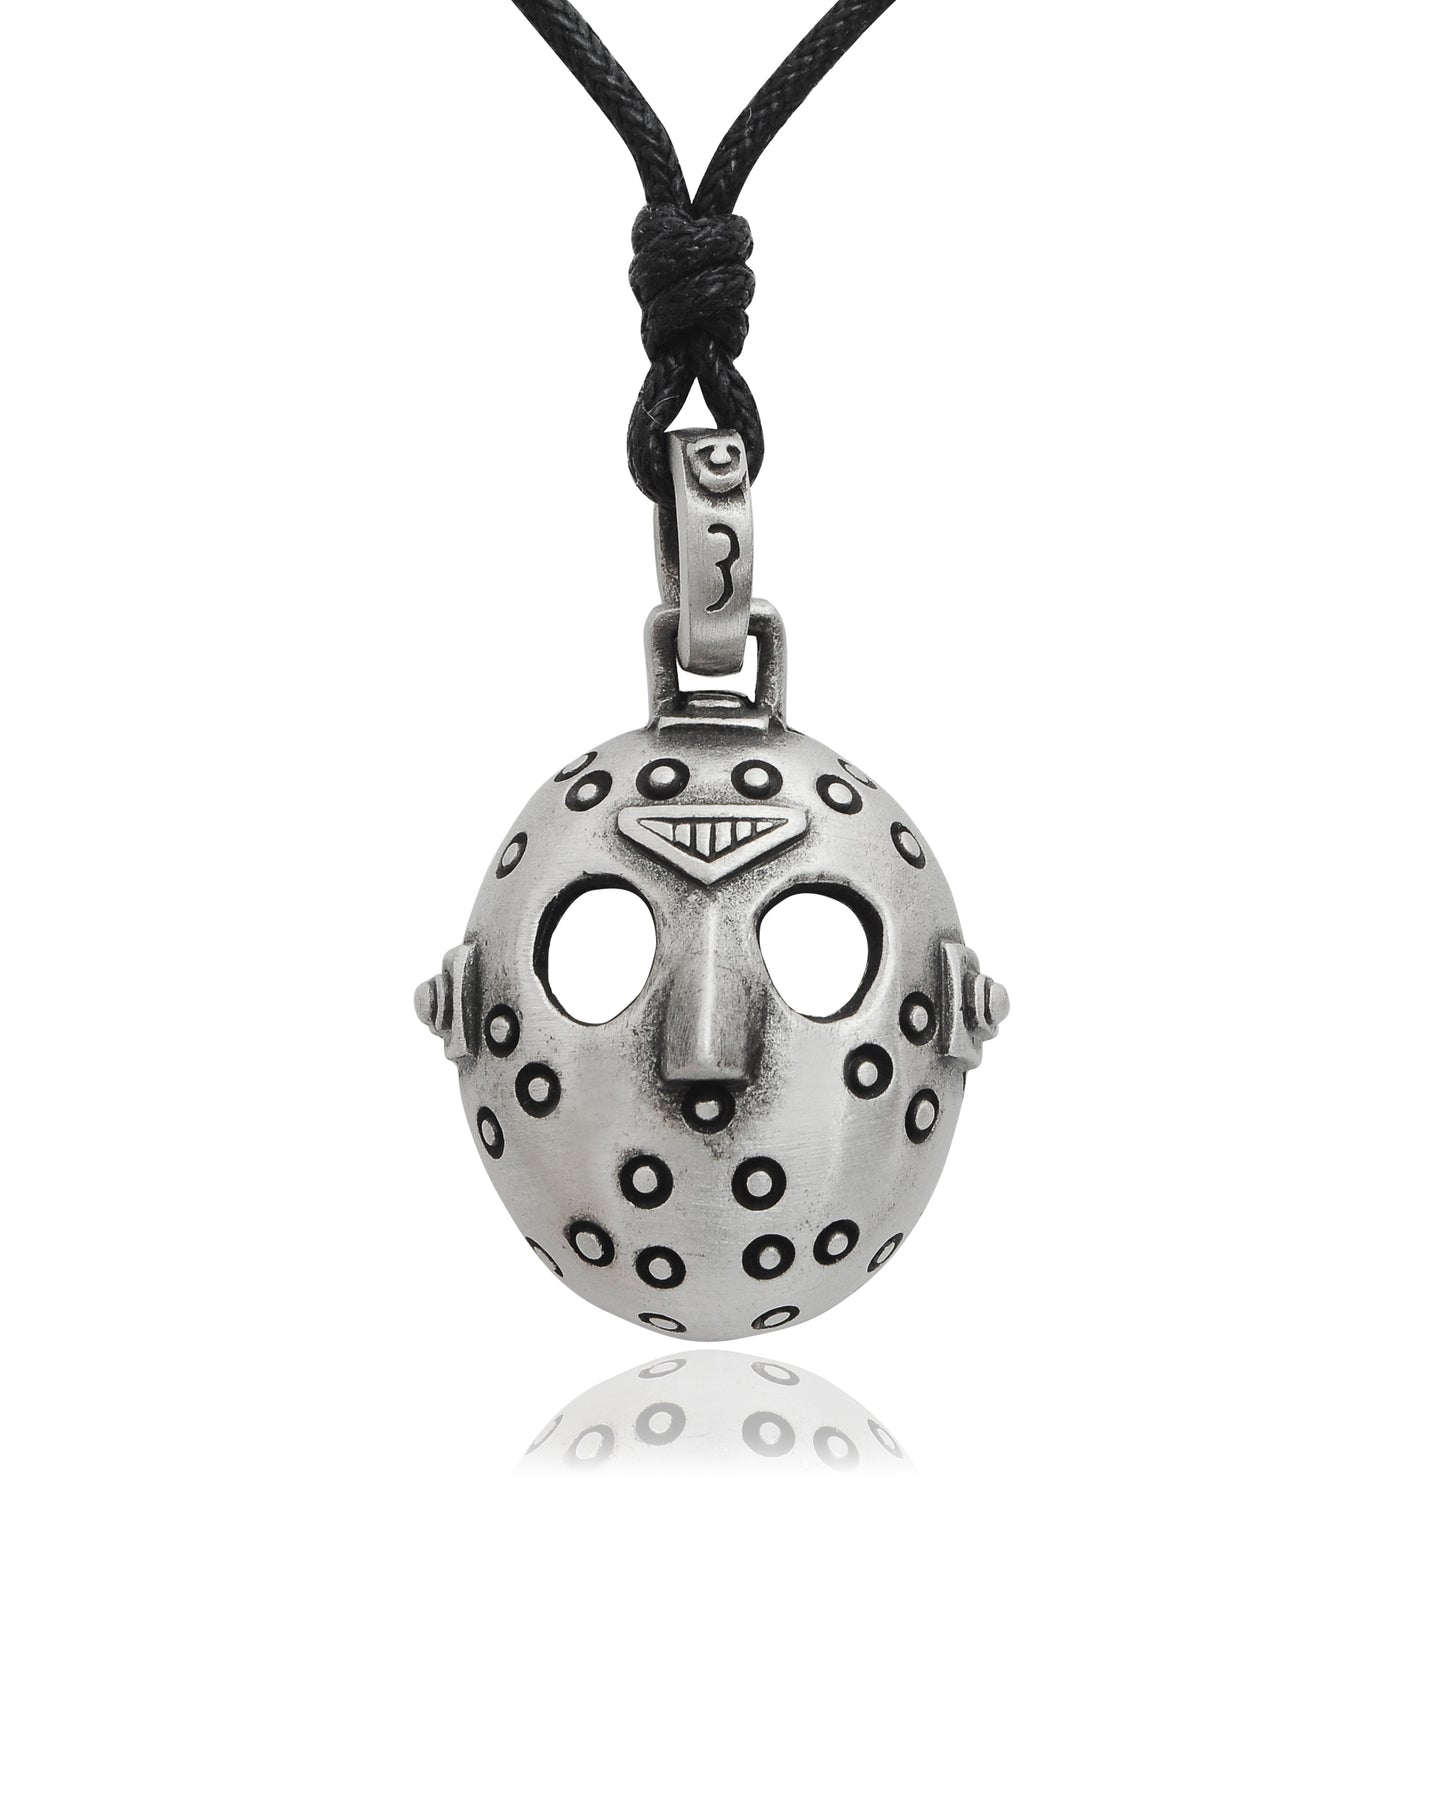 New Jason Hockey Mask Silver Pewter Gold Brass Necklace Pendant Jewelry